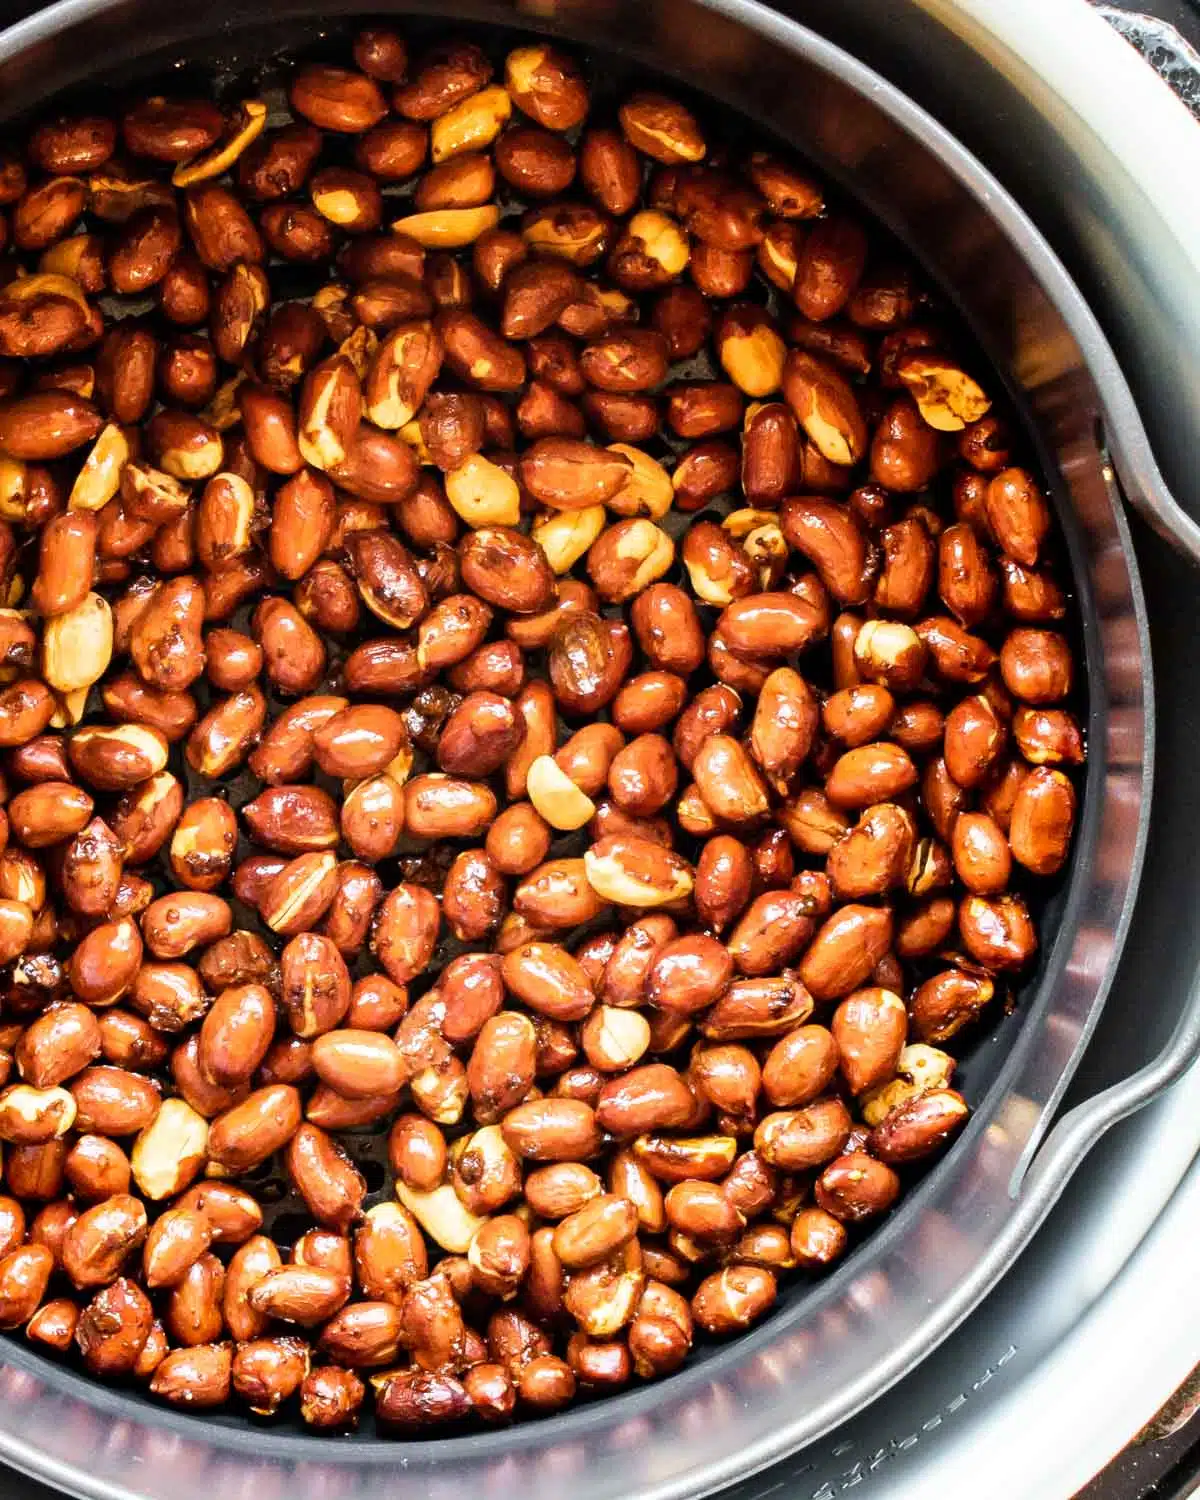 roasted peanuts in an air fryer basket.